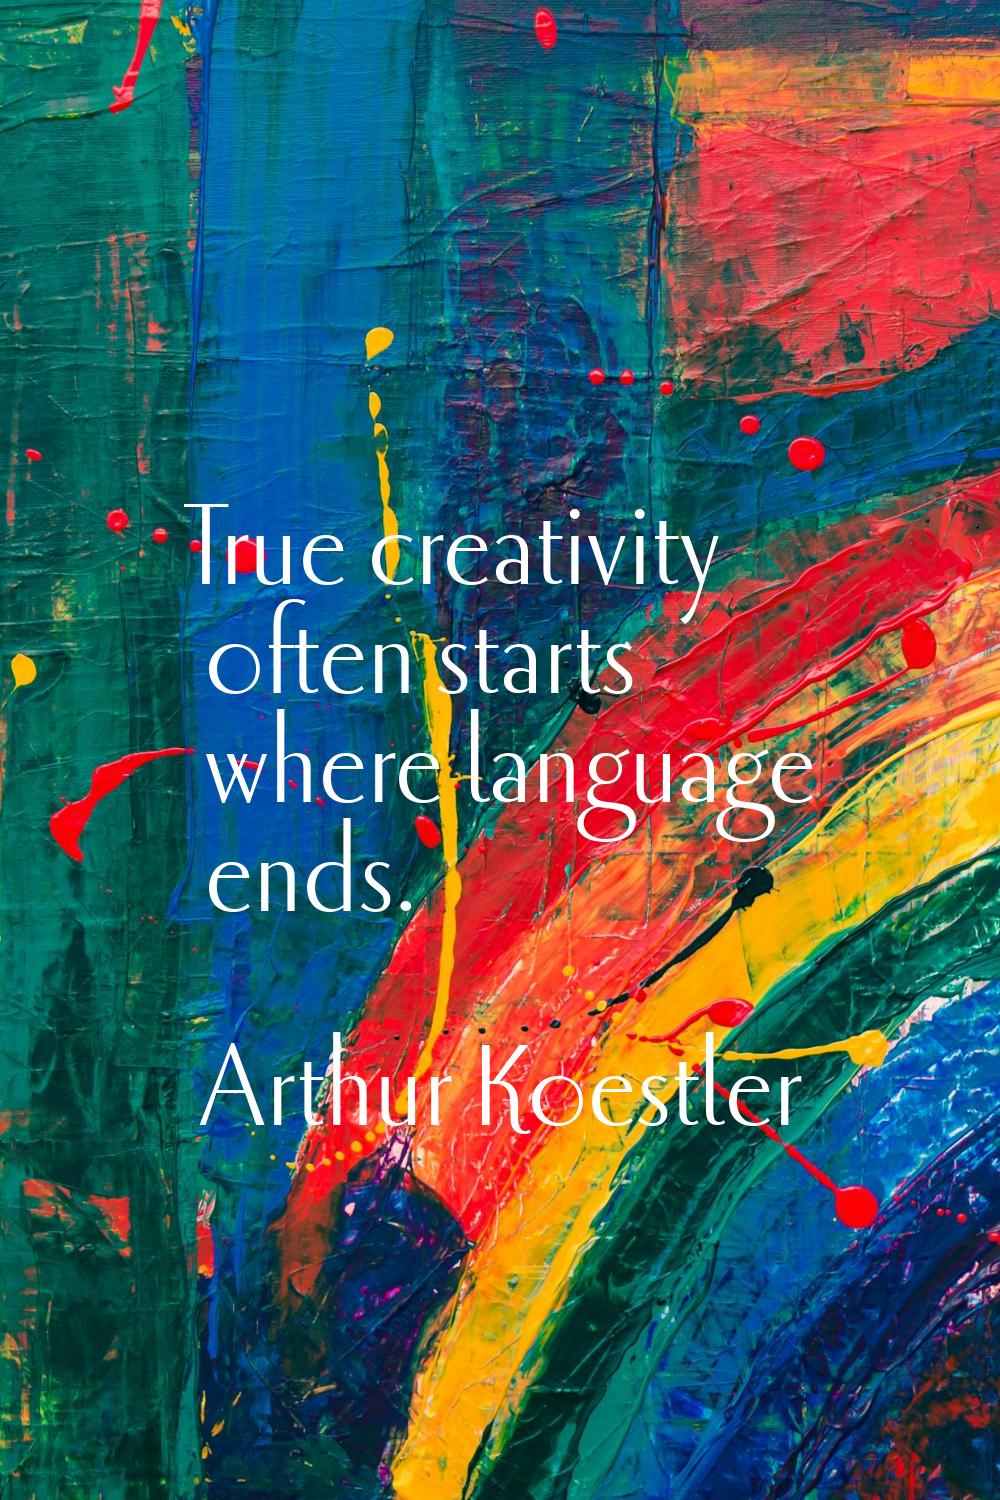 True creativity often starts where language ends.